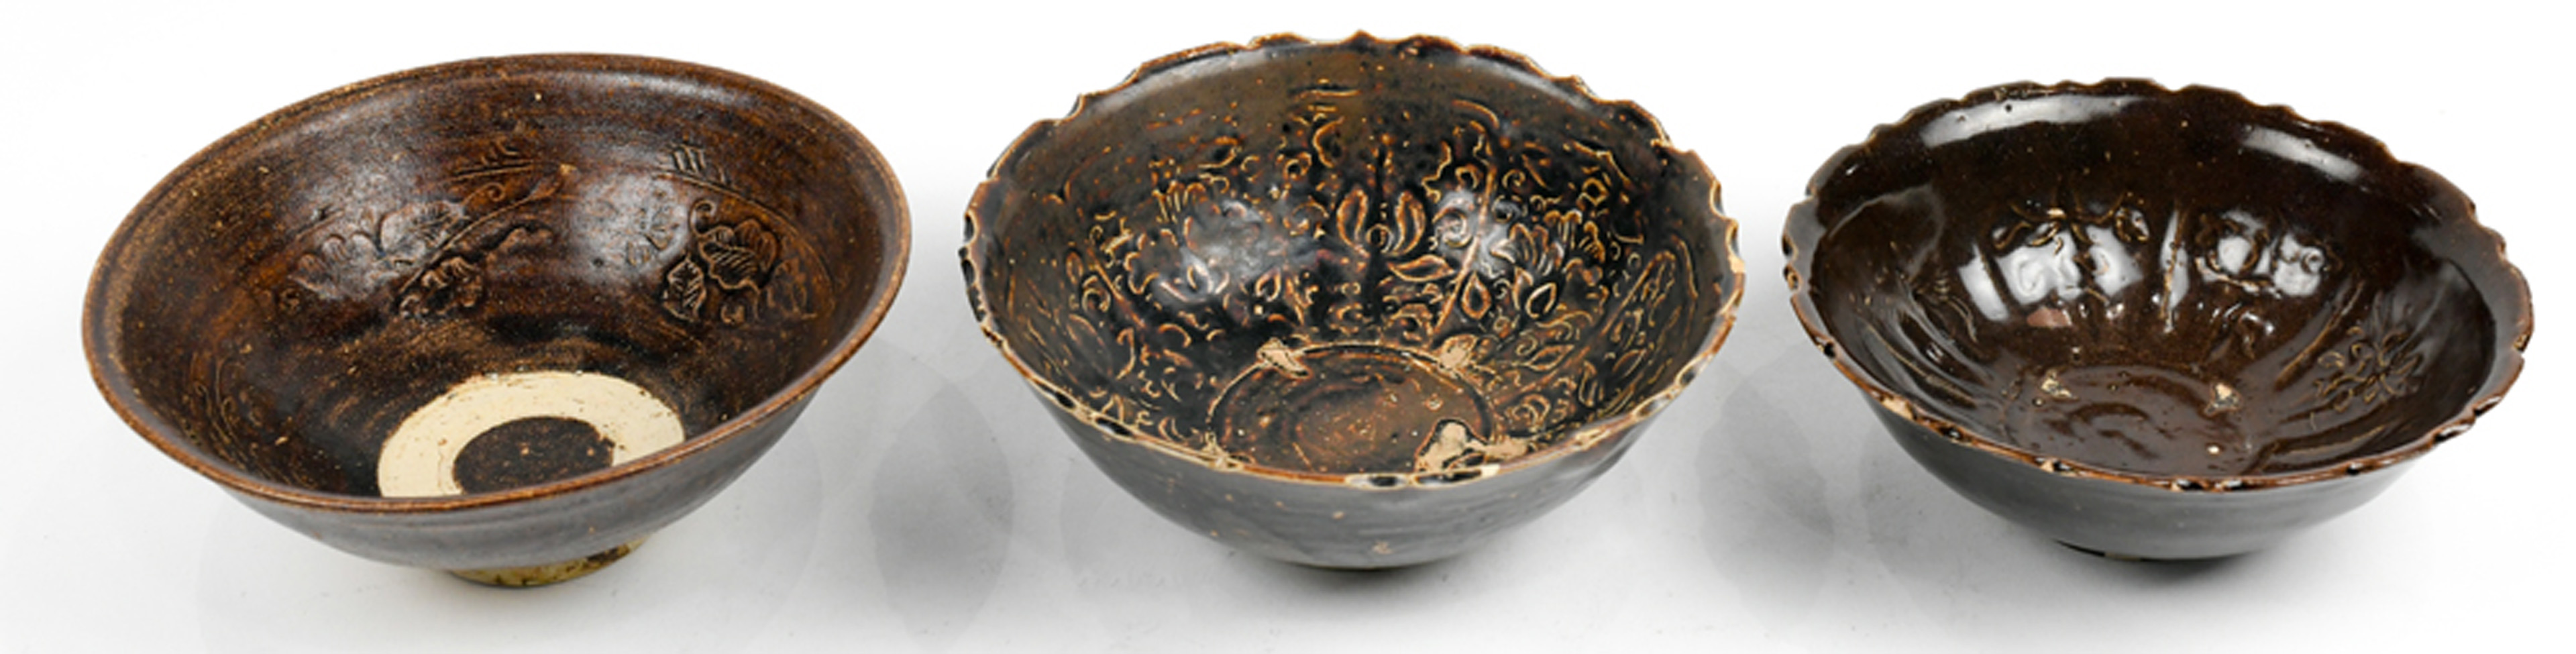 (3) Vietnamese Tran Brown Glaze Ceramic Bowls